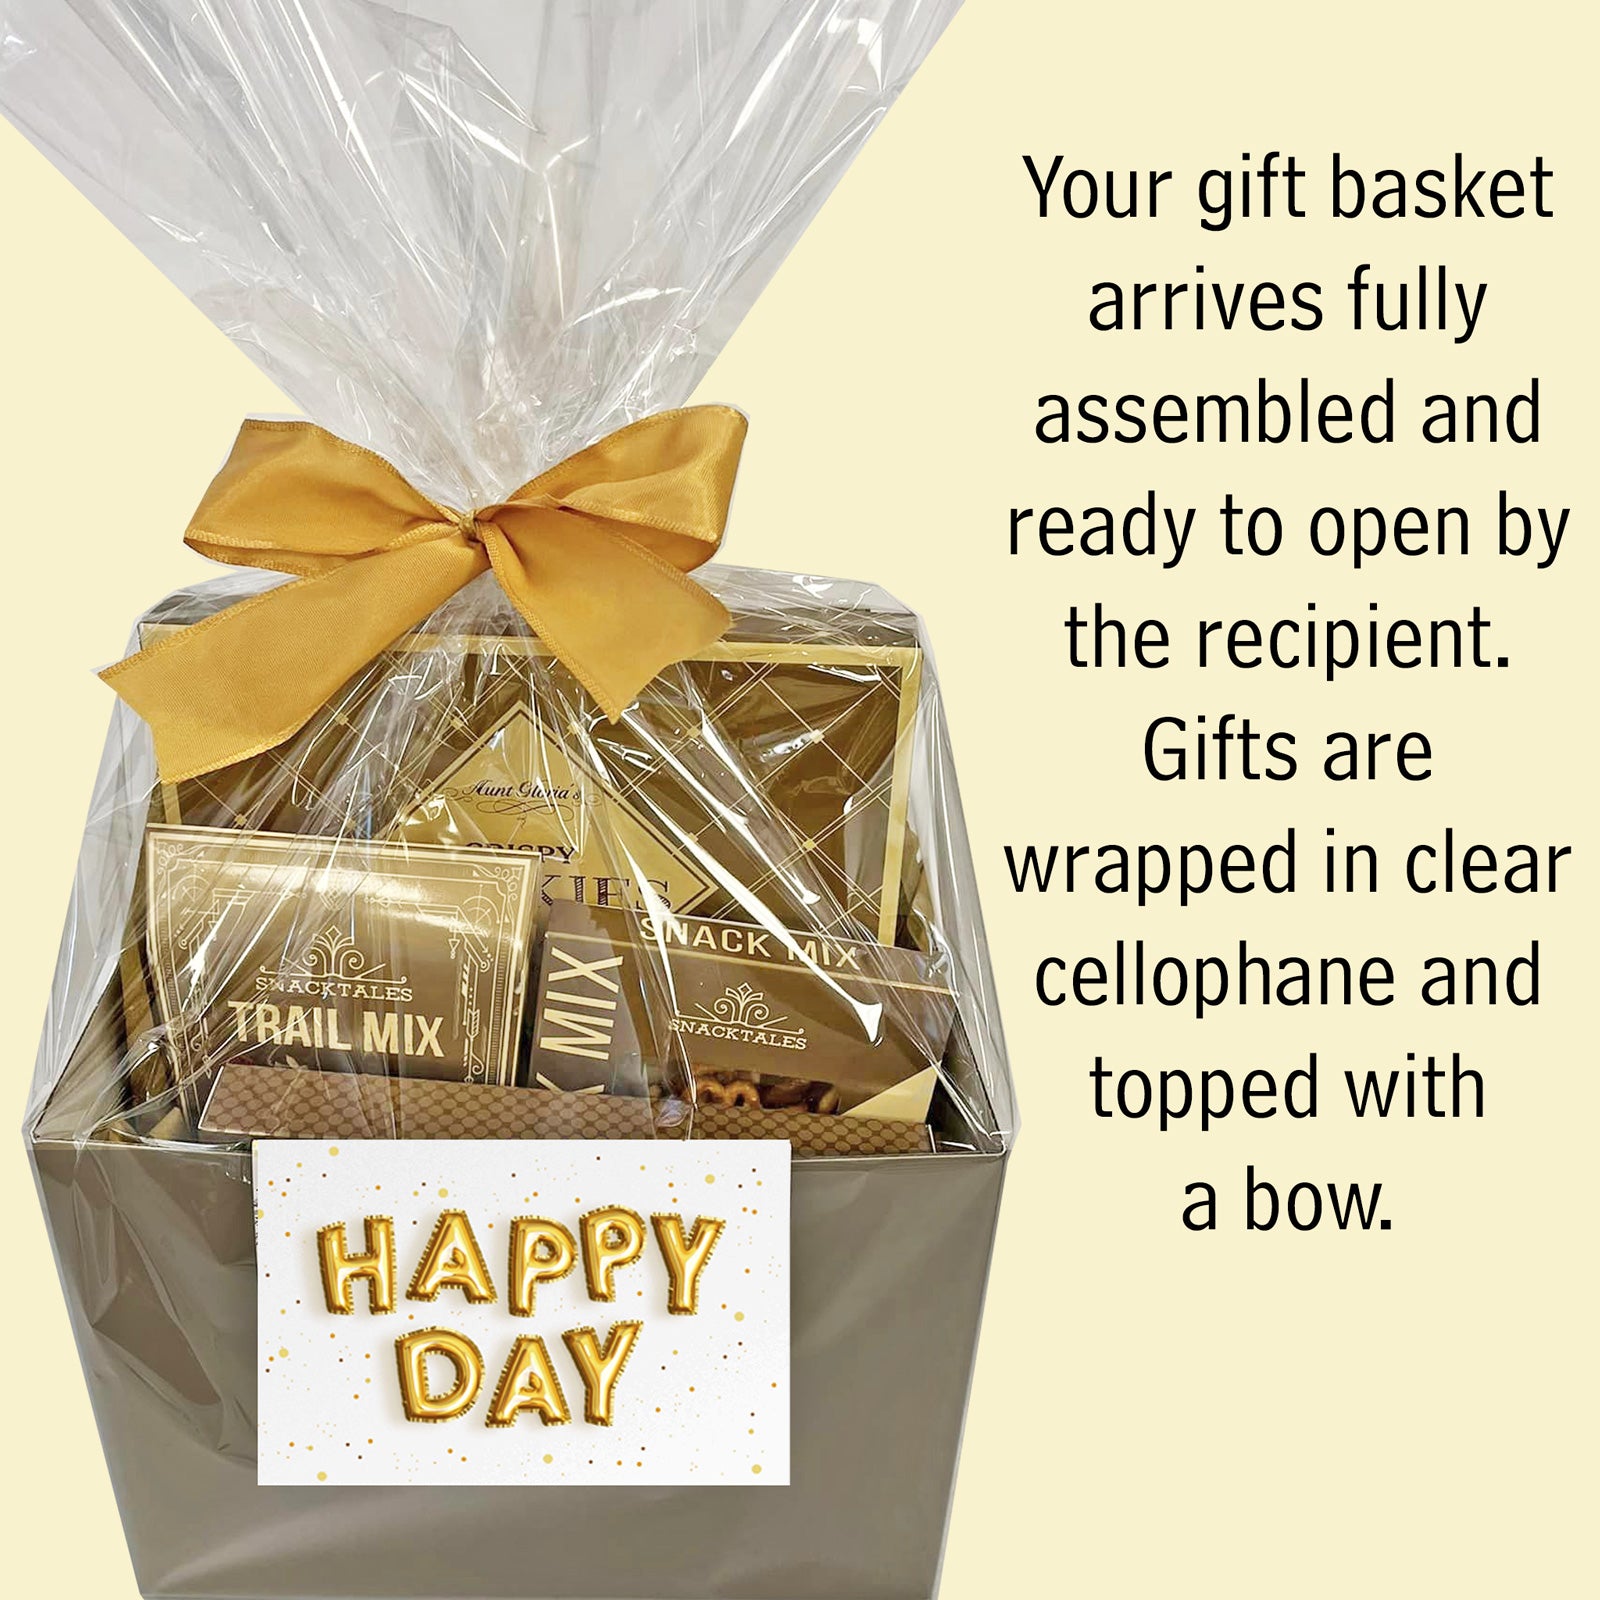 It's Your Birthday! Happy Birthday Gift Box